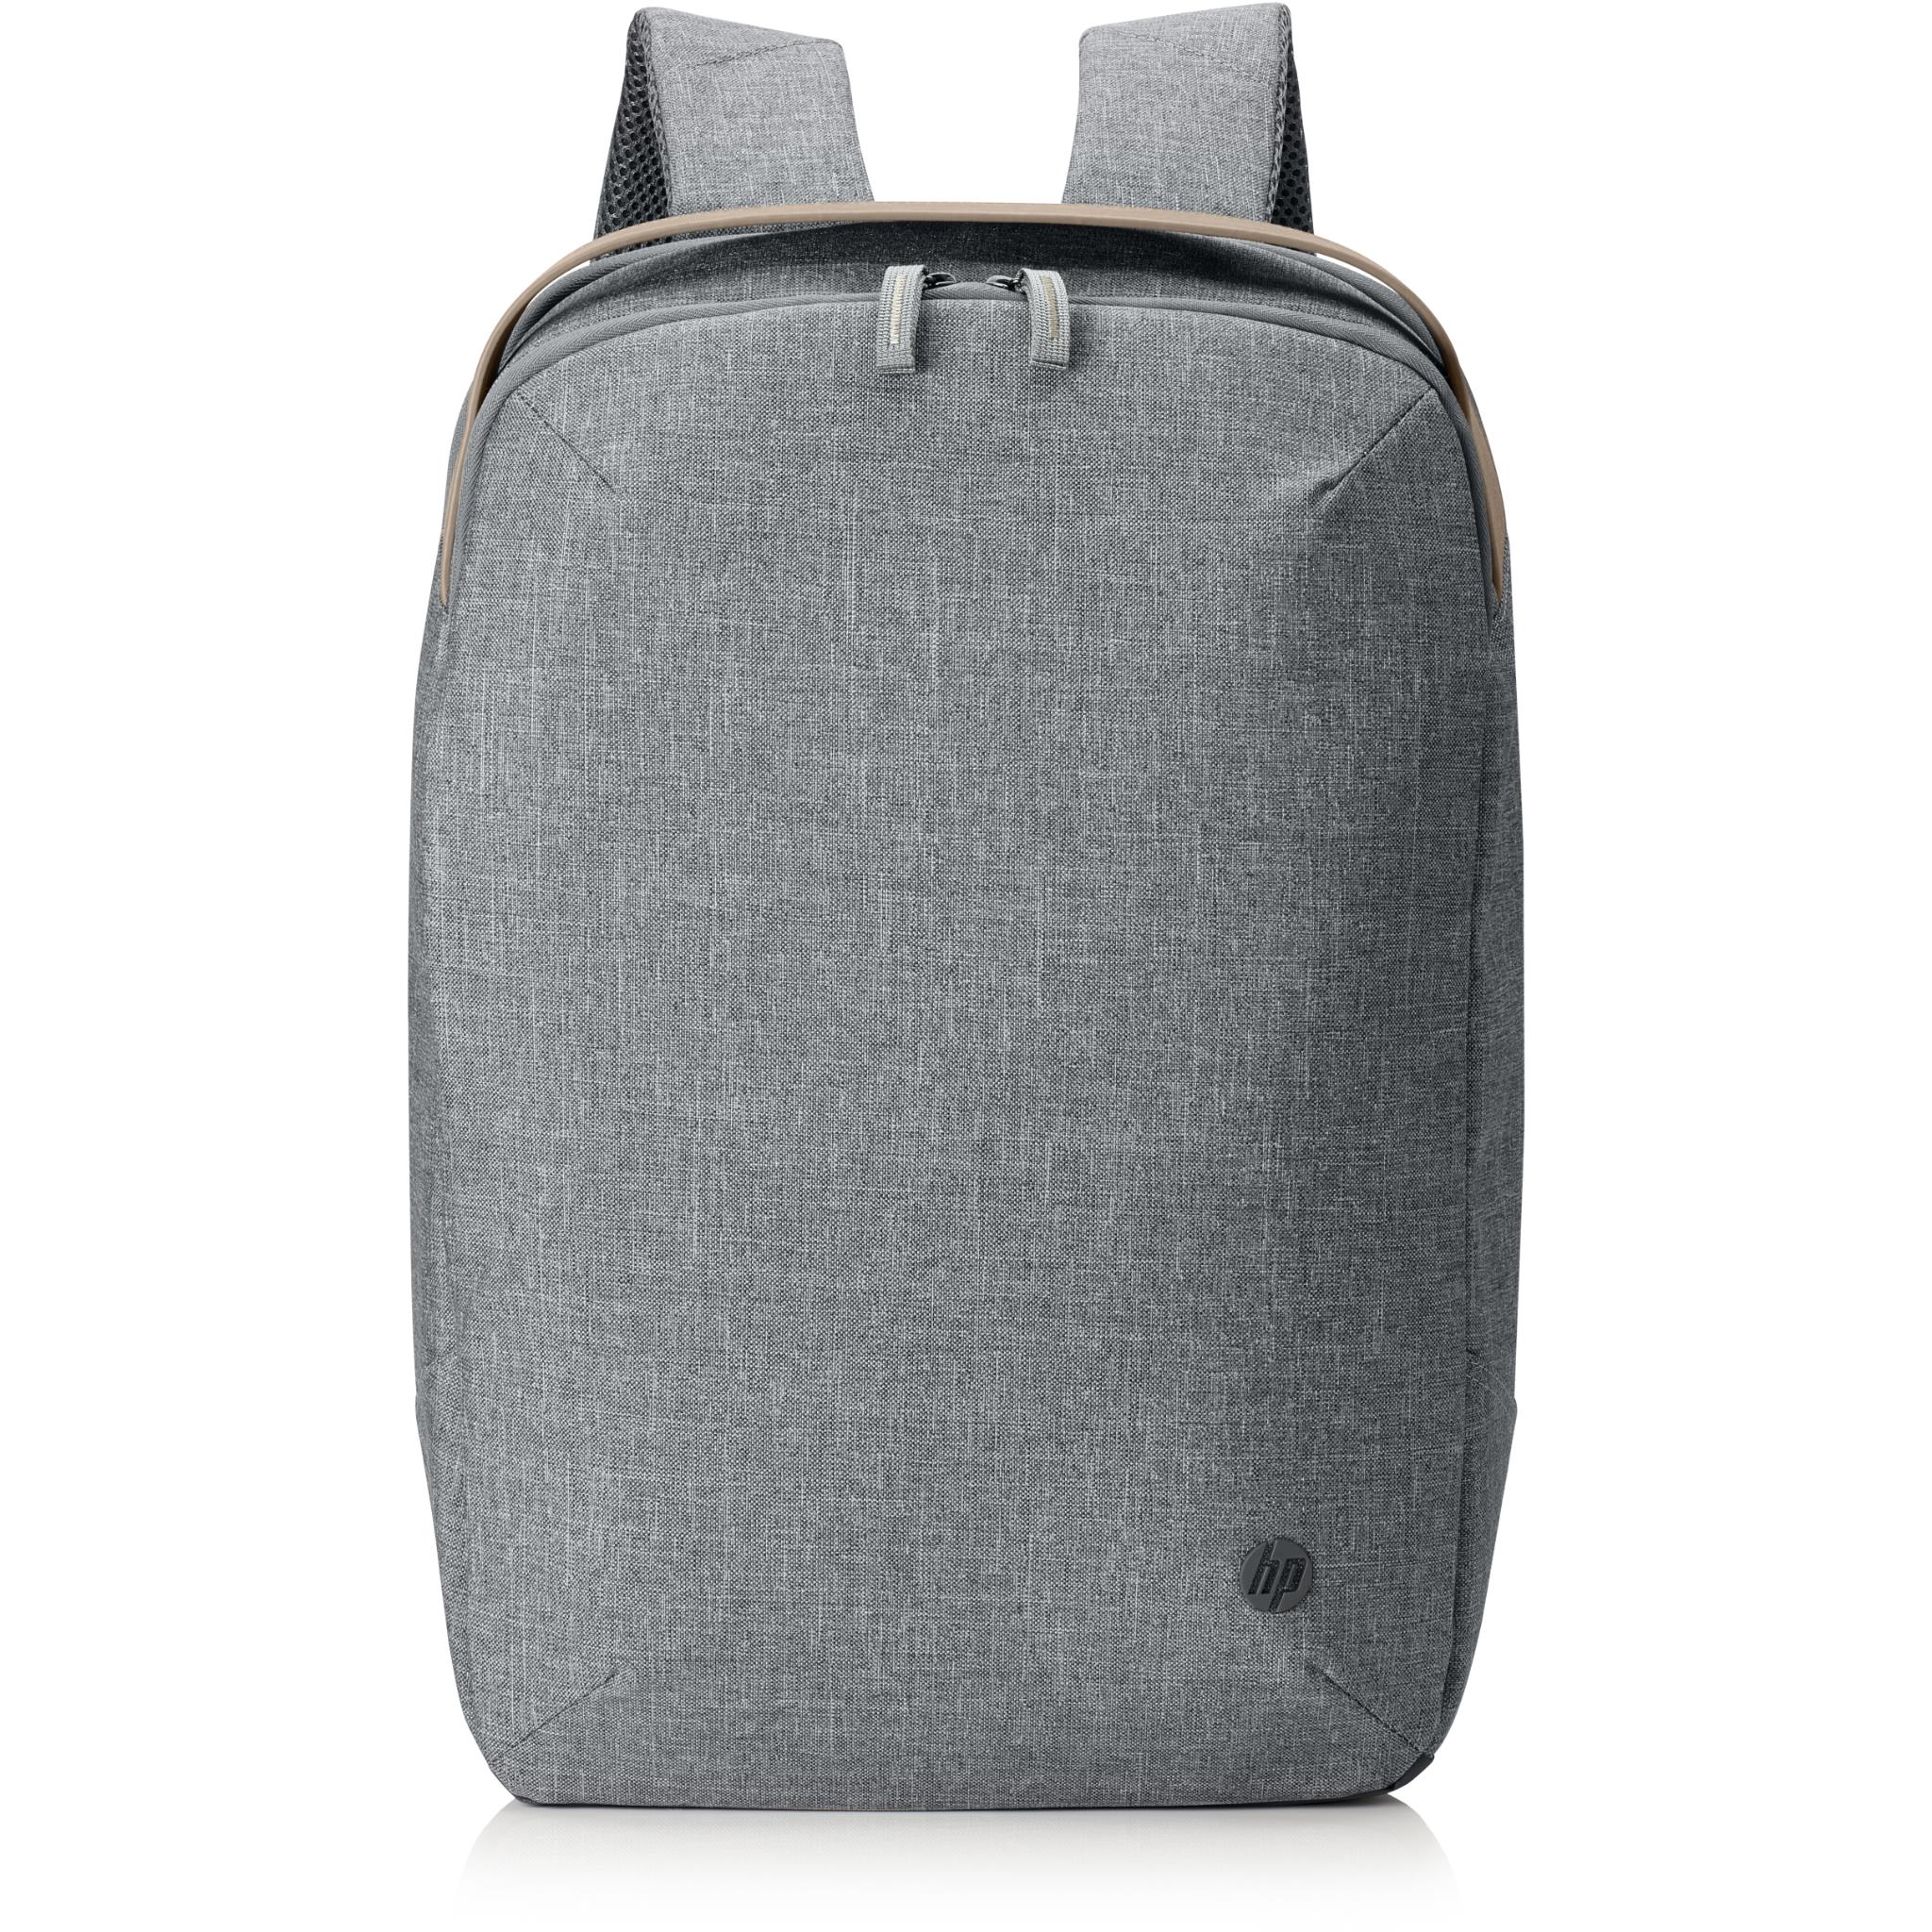 hp pav recycled 15" laptop backpack bag (grey)